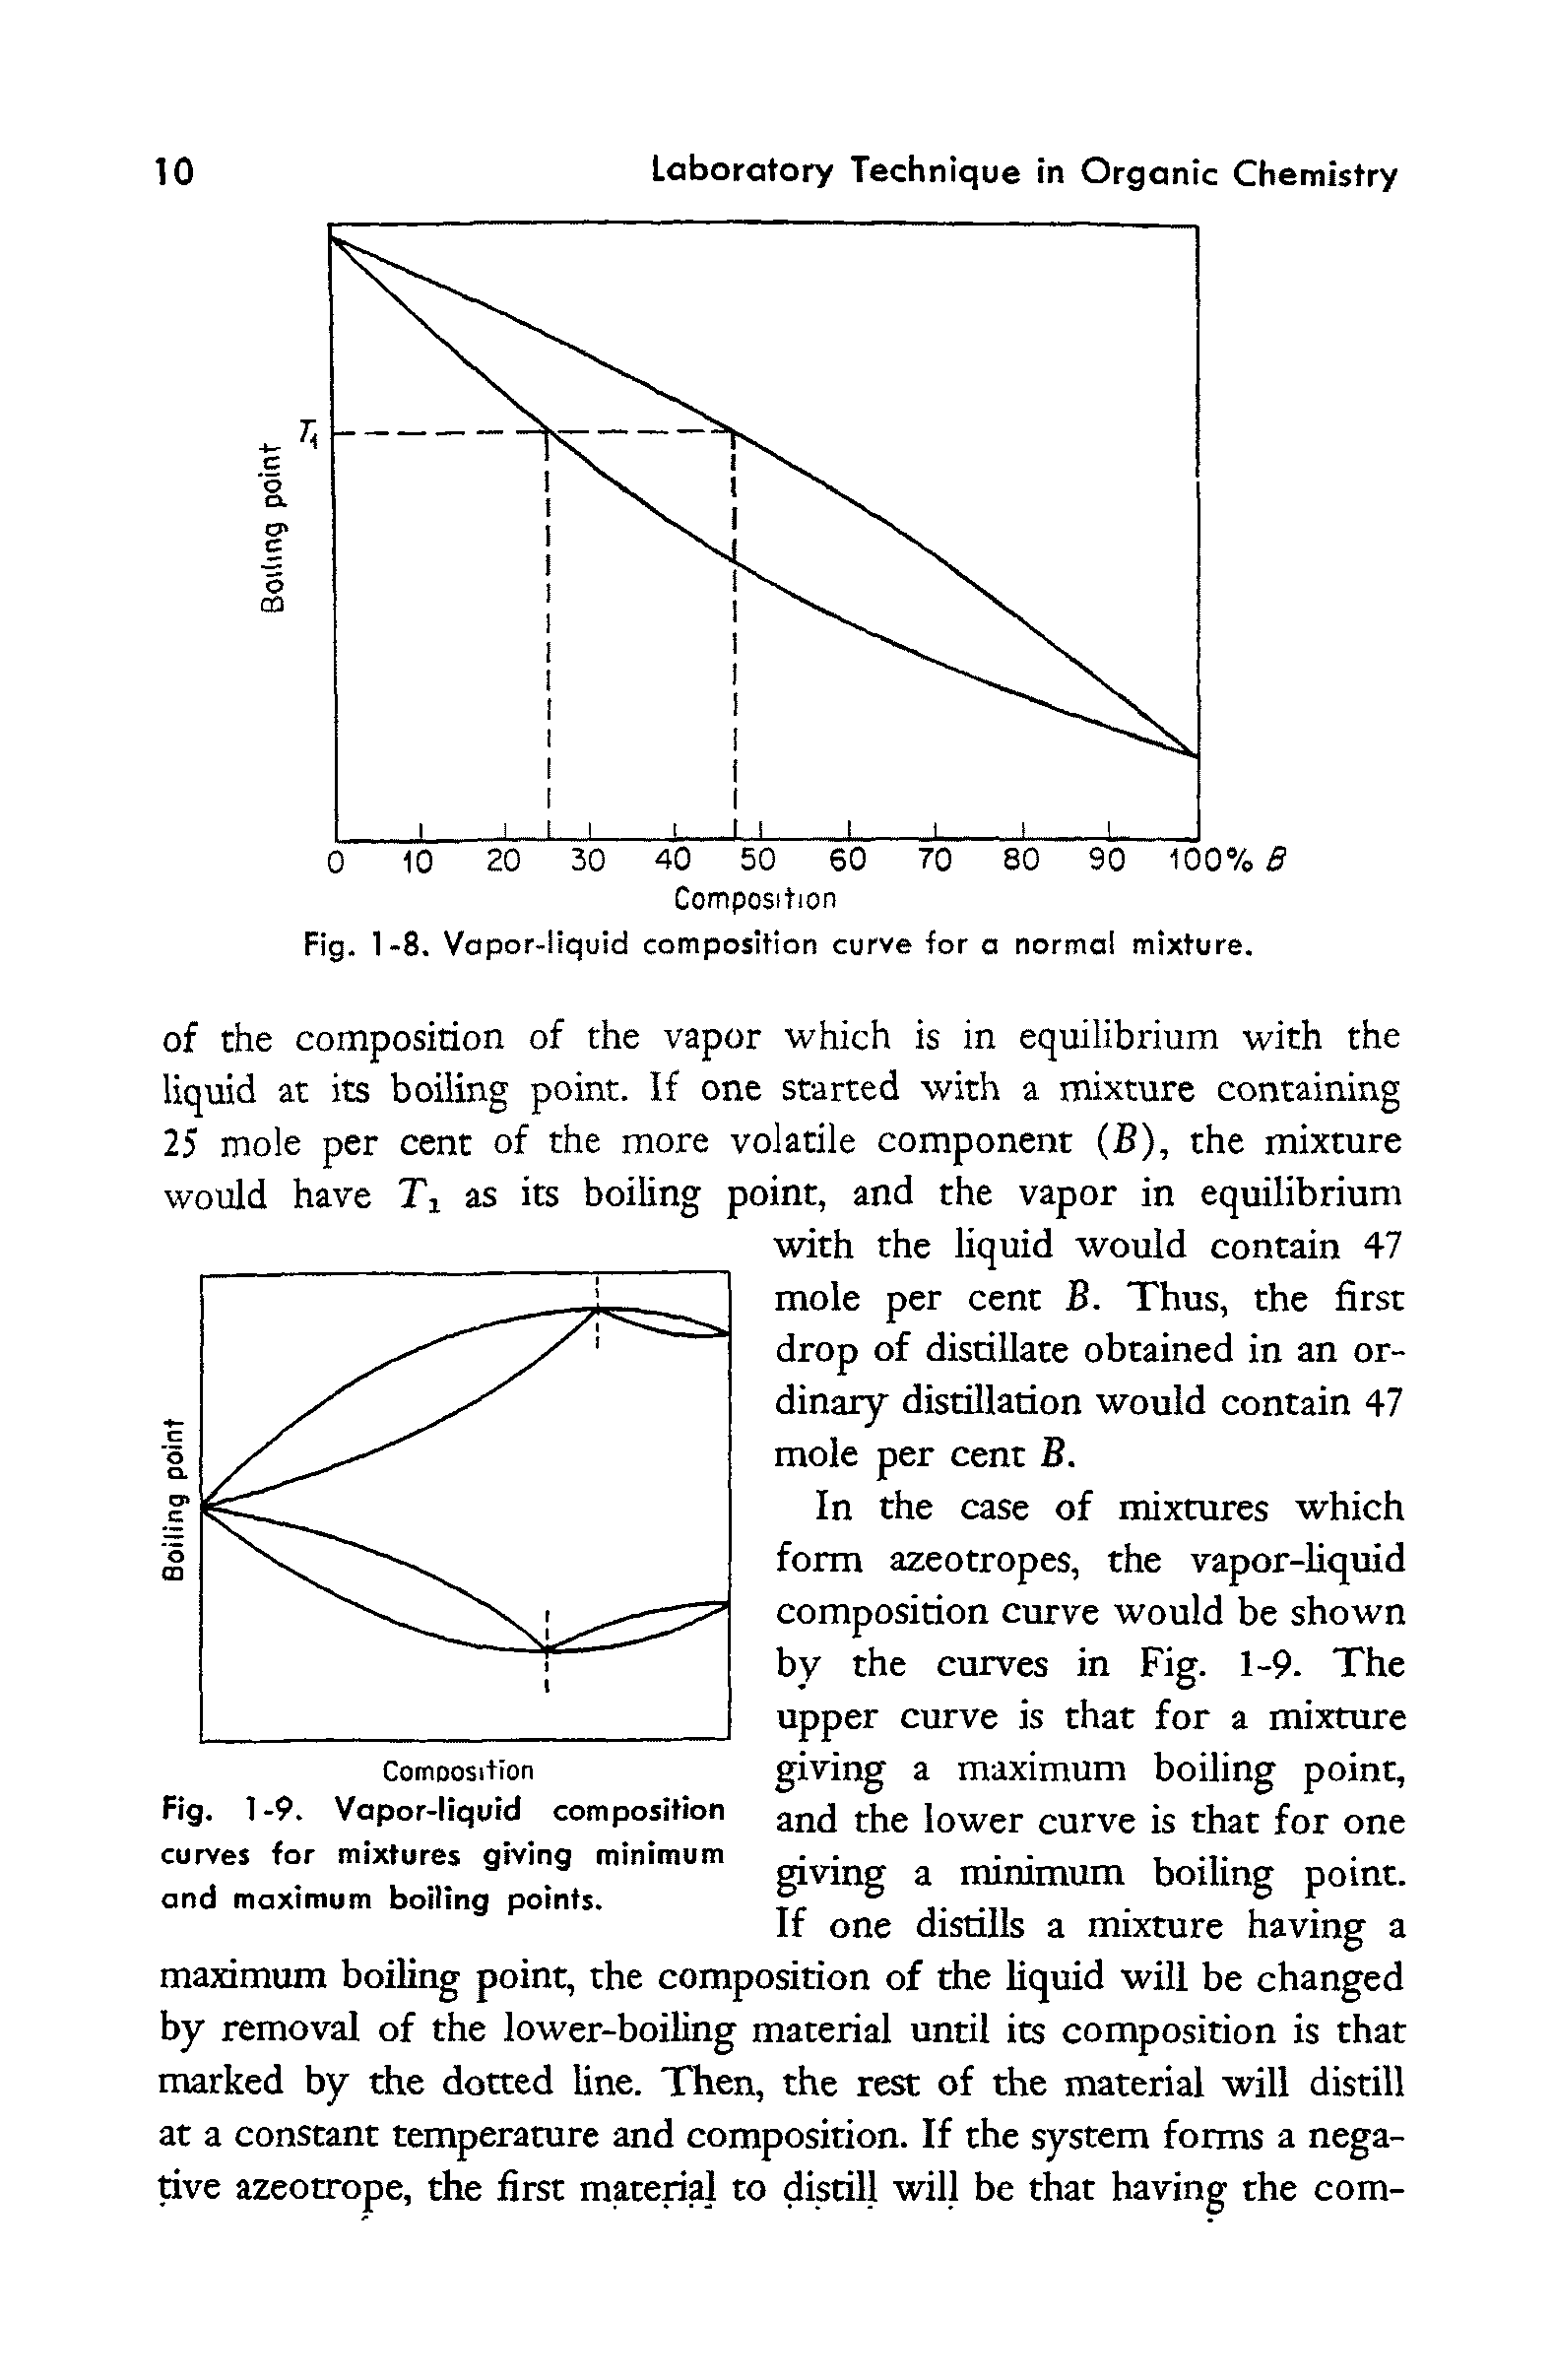 Fig. 1-8. Vapor-liquid composition curve for a normal mixture.